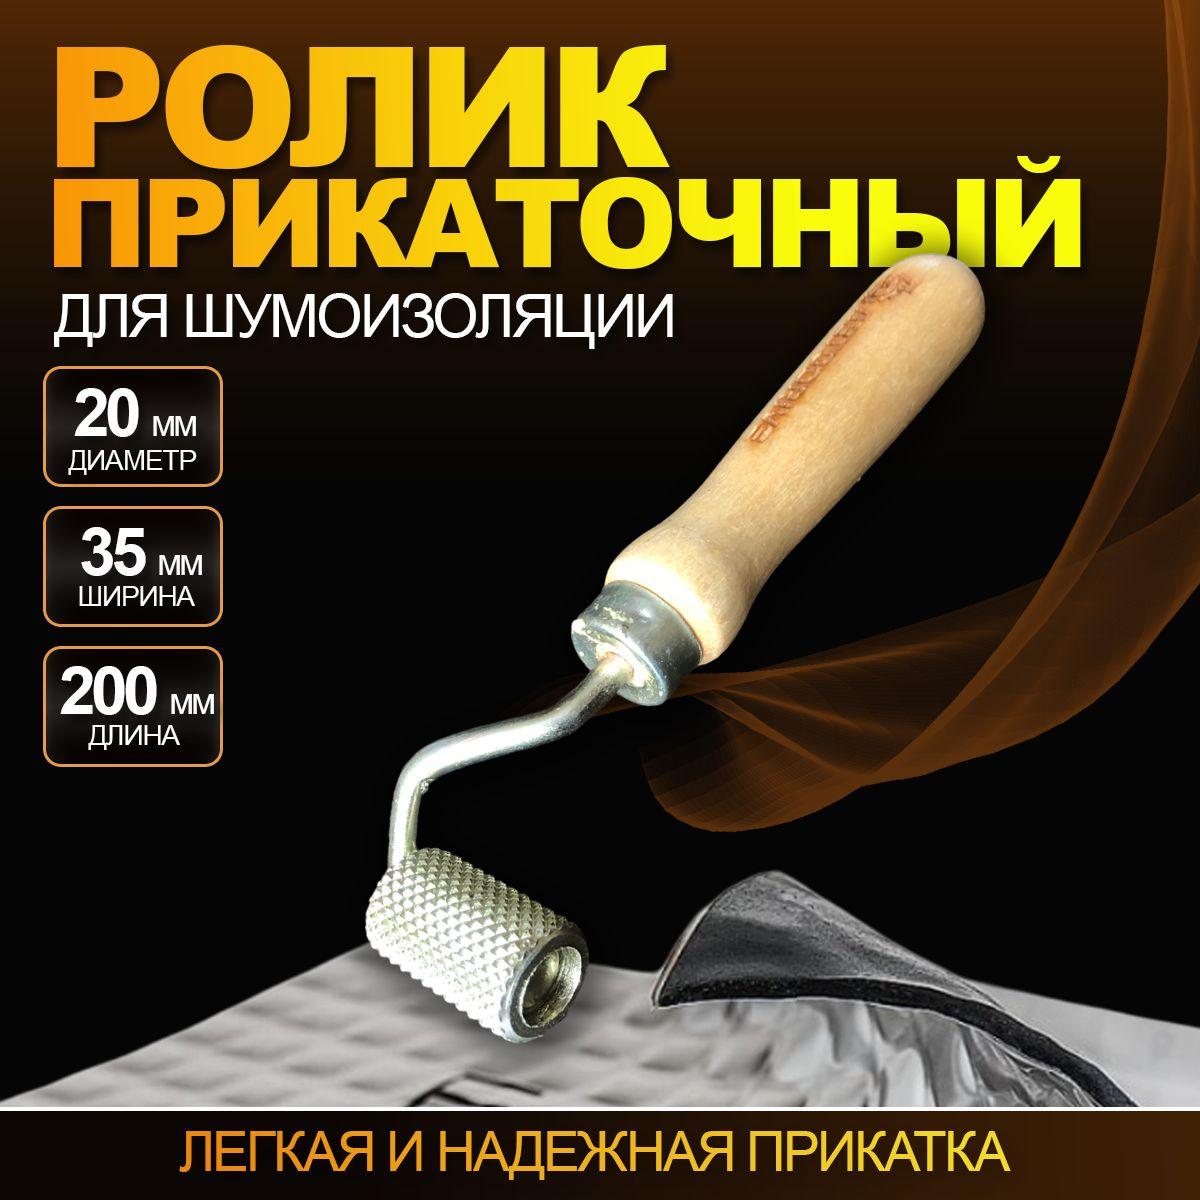 АВТОDRIVE | Валик прикаточный для шумоизоляции, ролик для виброизоляции / 190Х35 мм, диаметр 20 мм.